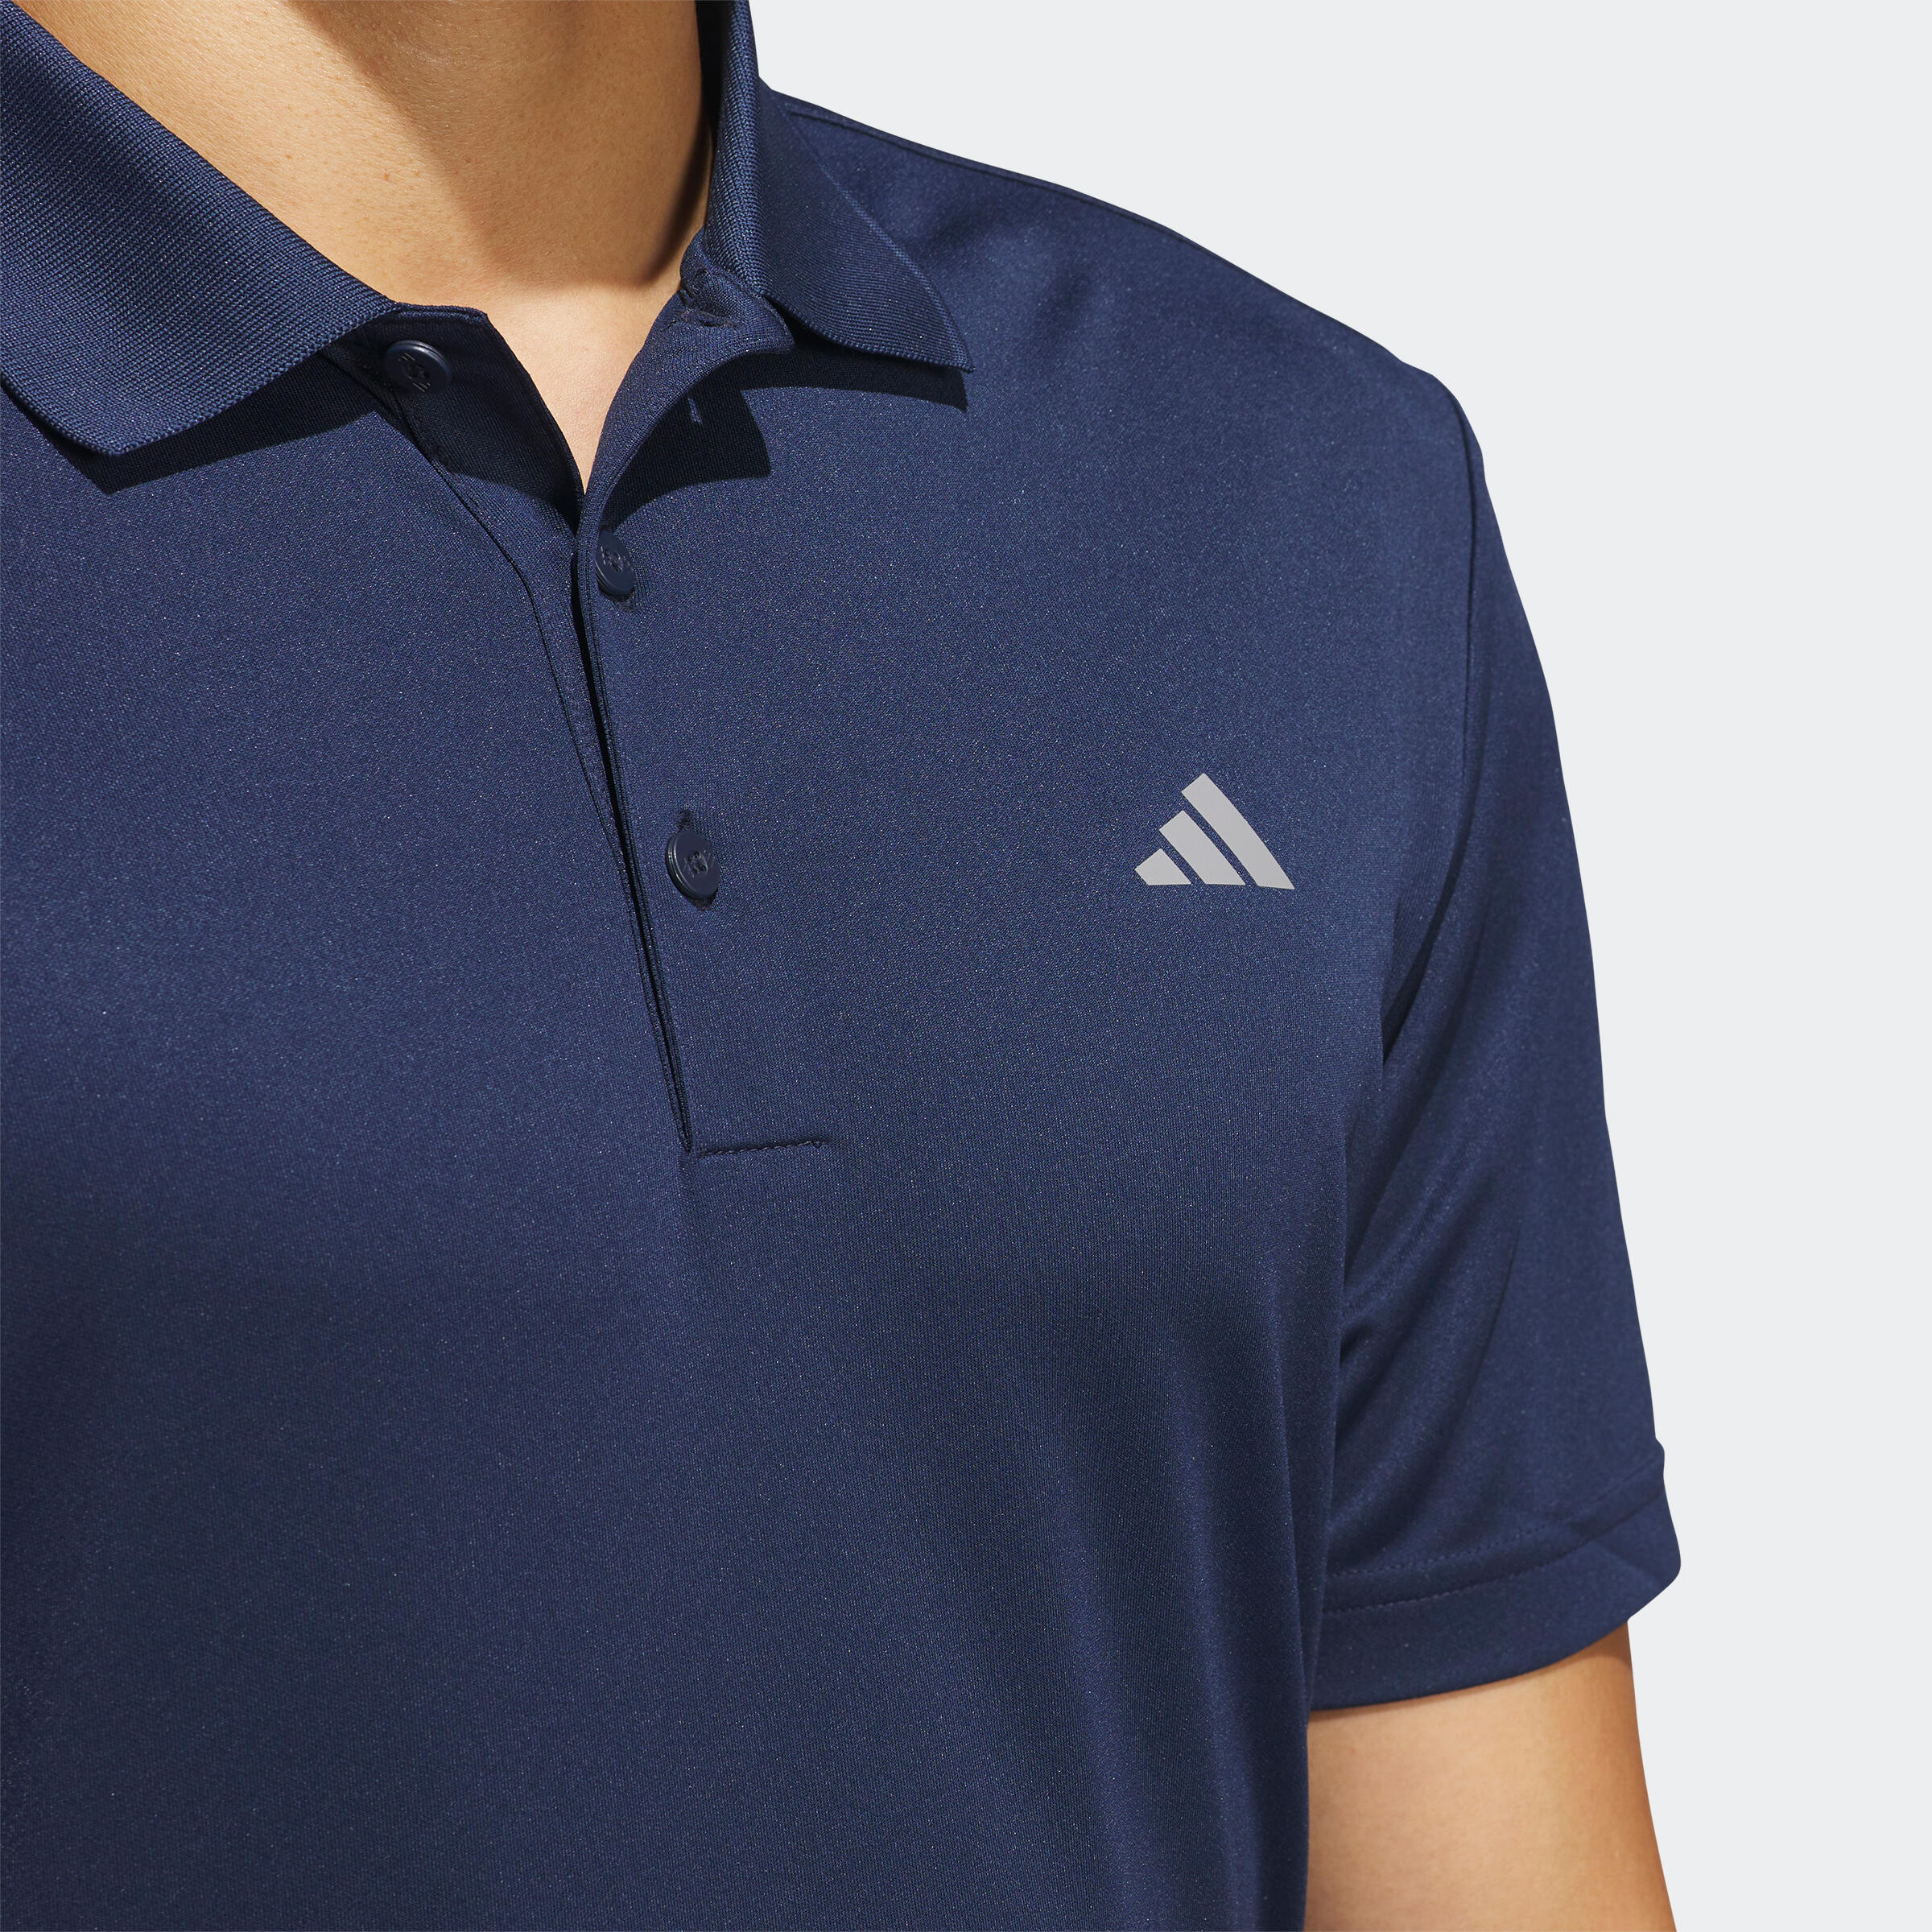 Men's golf short sleeve polo shirt - Adidas navy blue 3/4